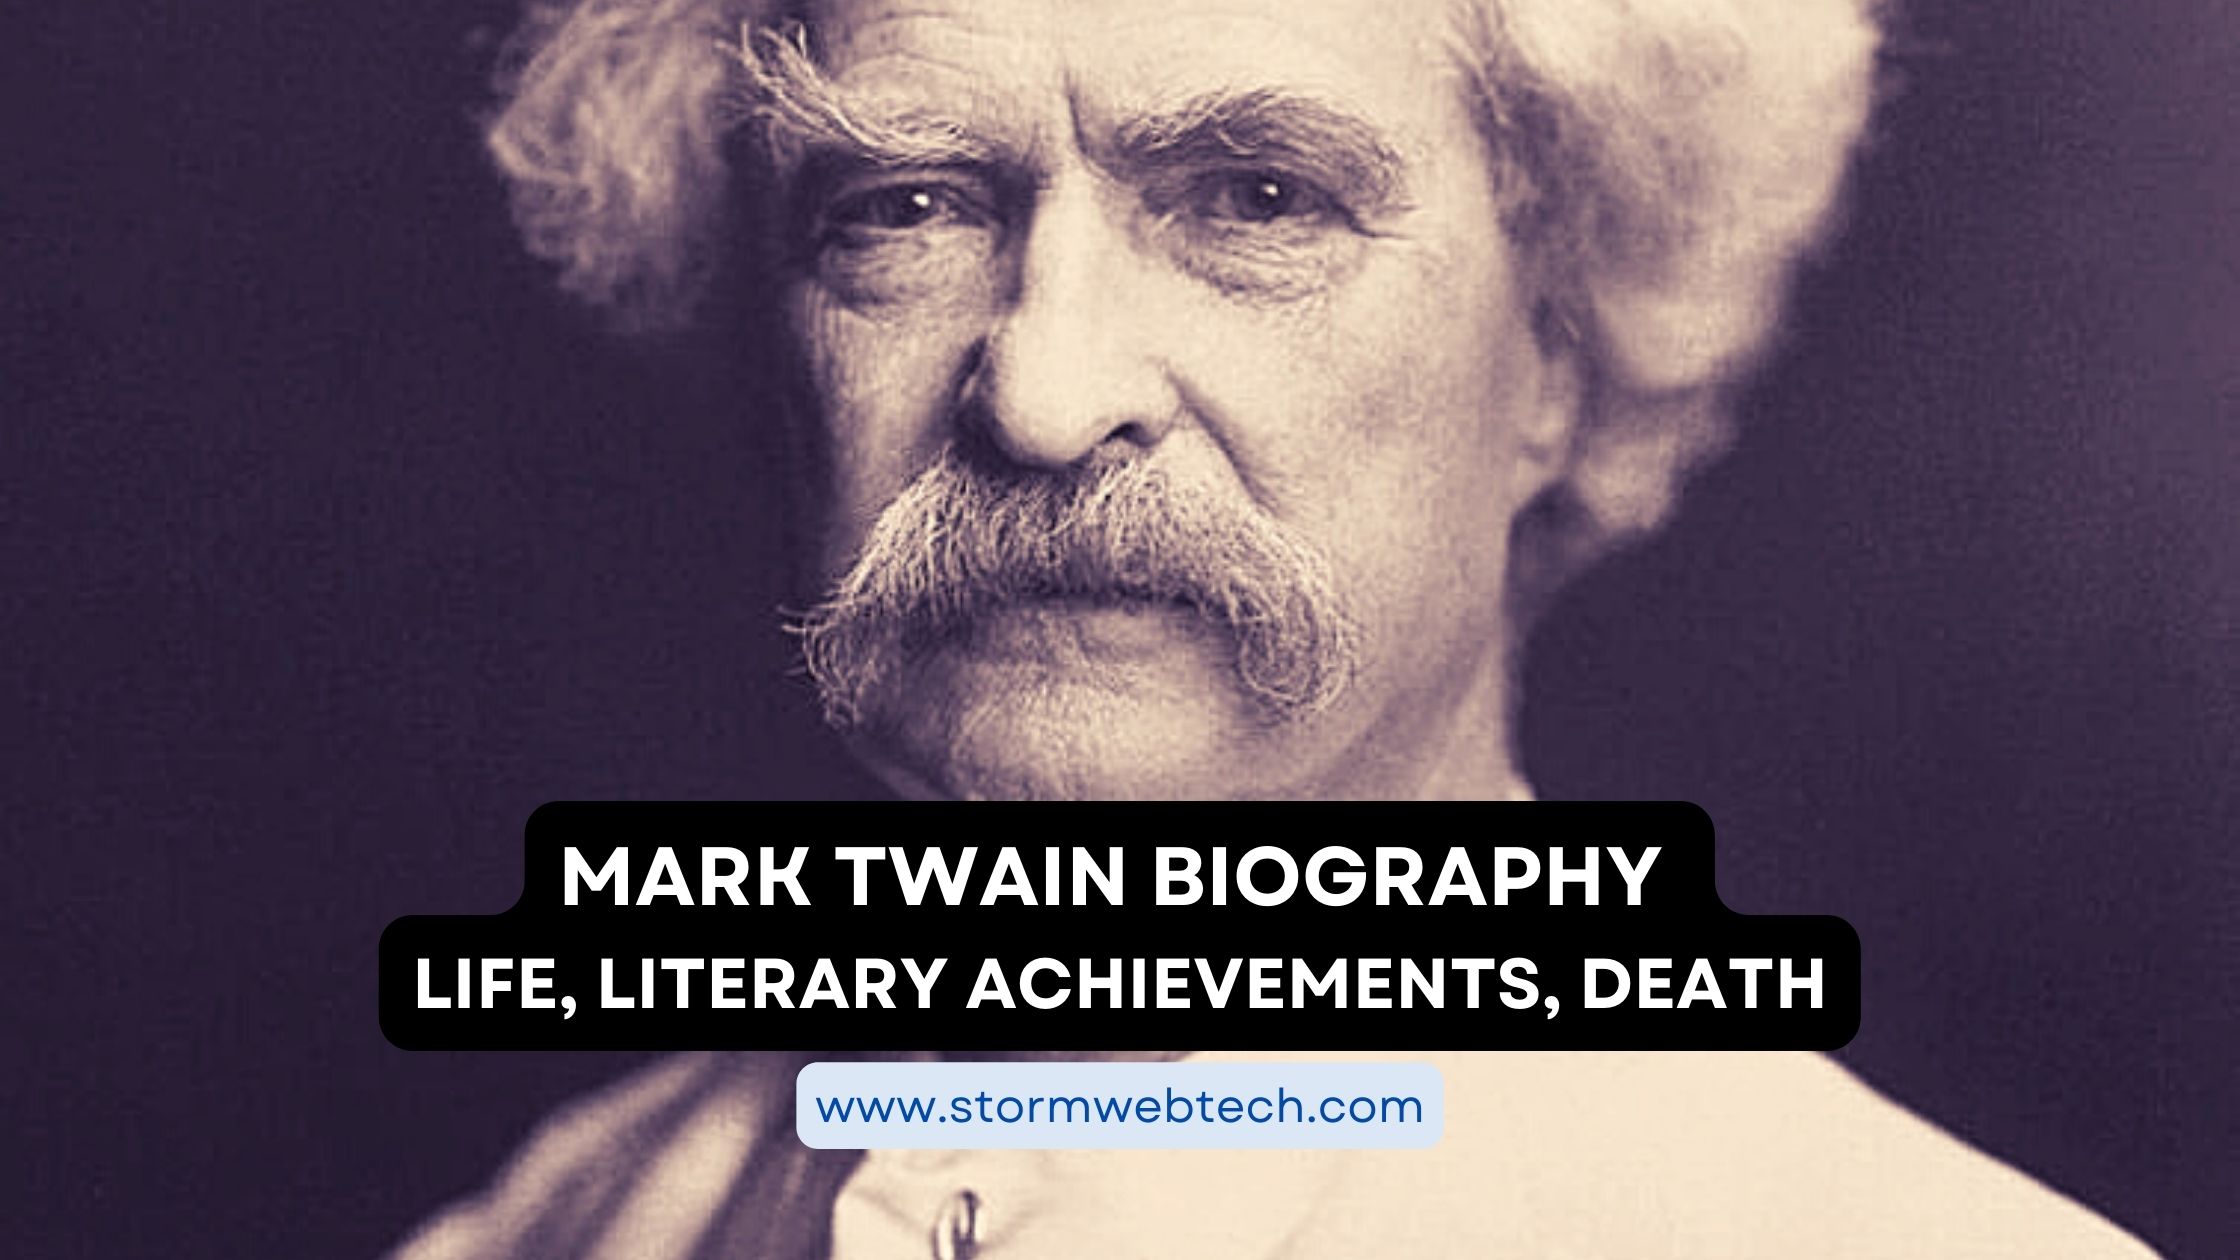 Mark Twain Biography, Mark Twain Early Life, Mark Twain Literary Achievements, Mark Twain Death, Mark Twain Legacy, biography of mark twain